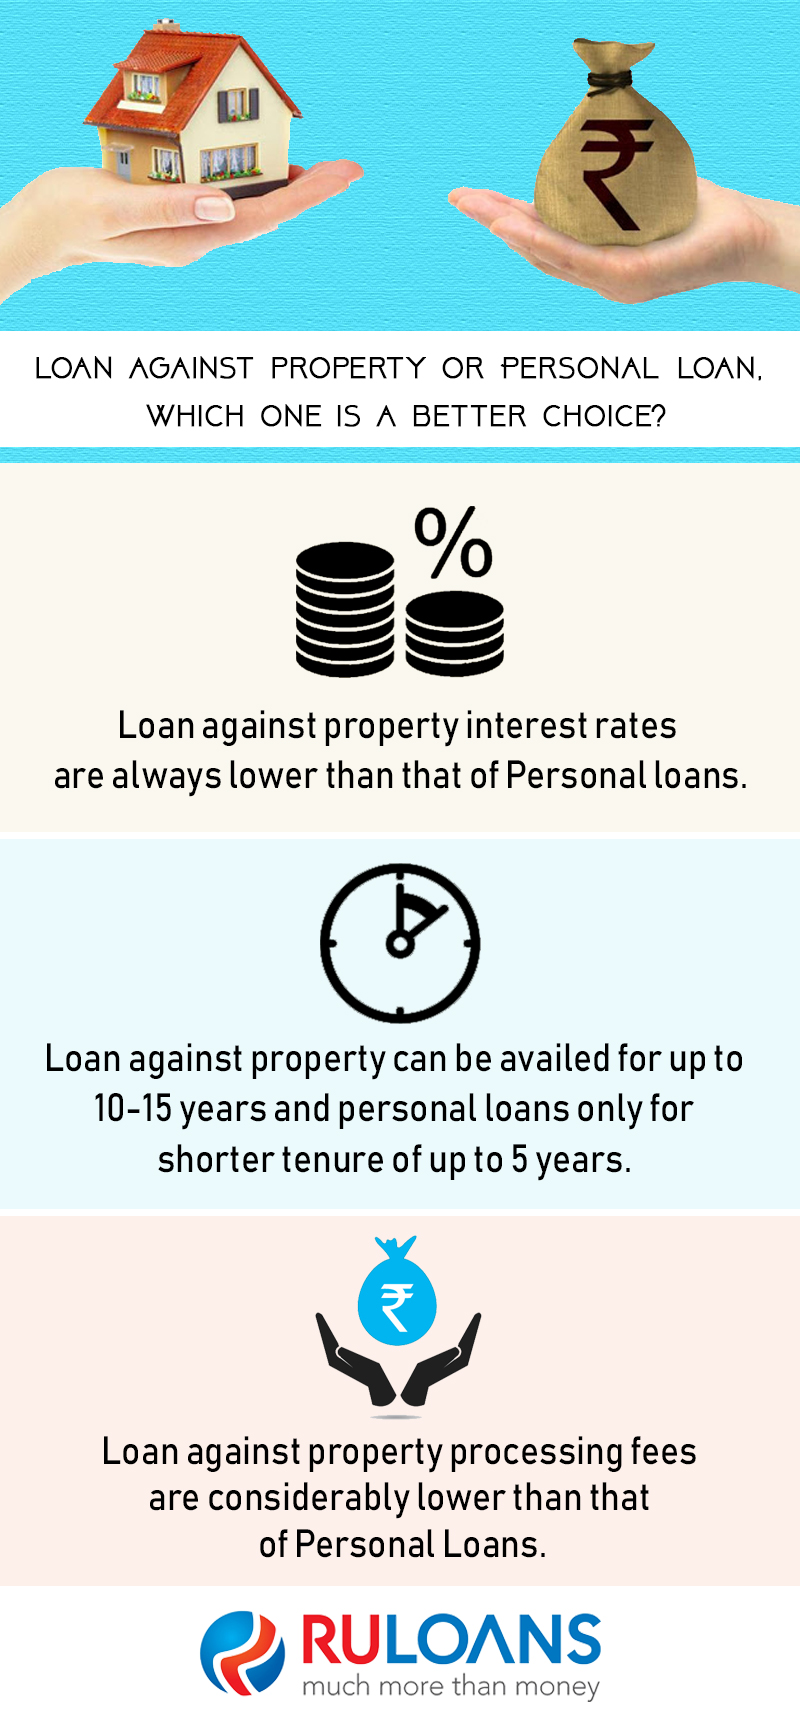 Loan against property or Personal loan